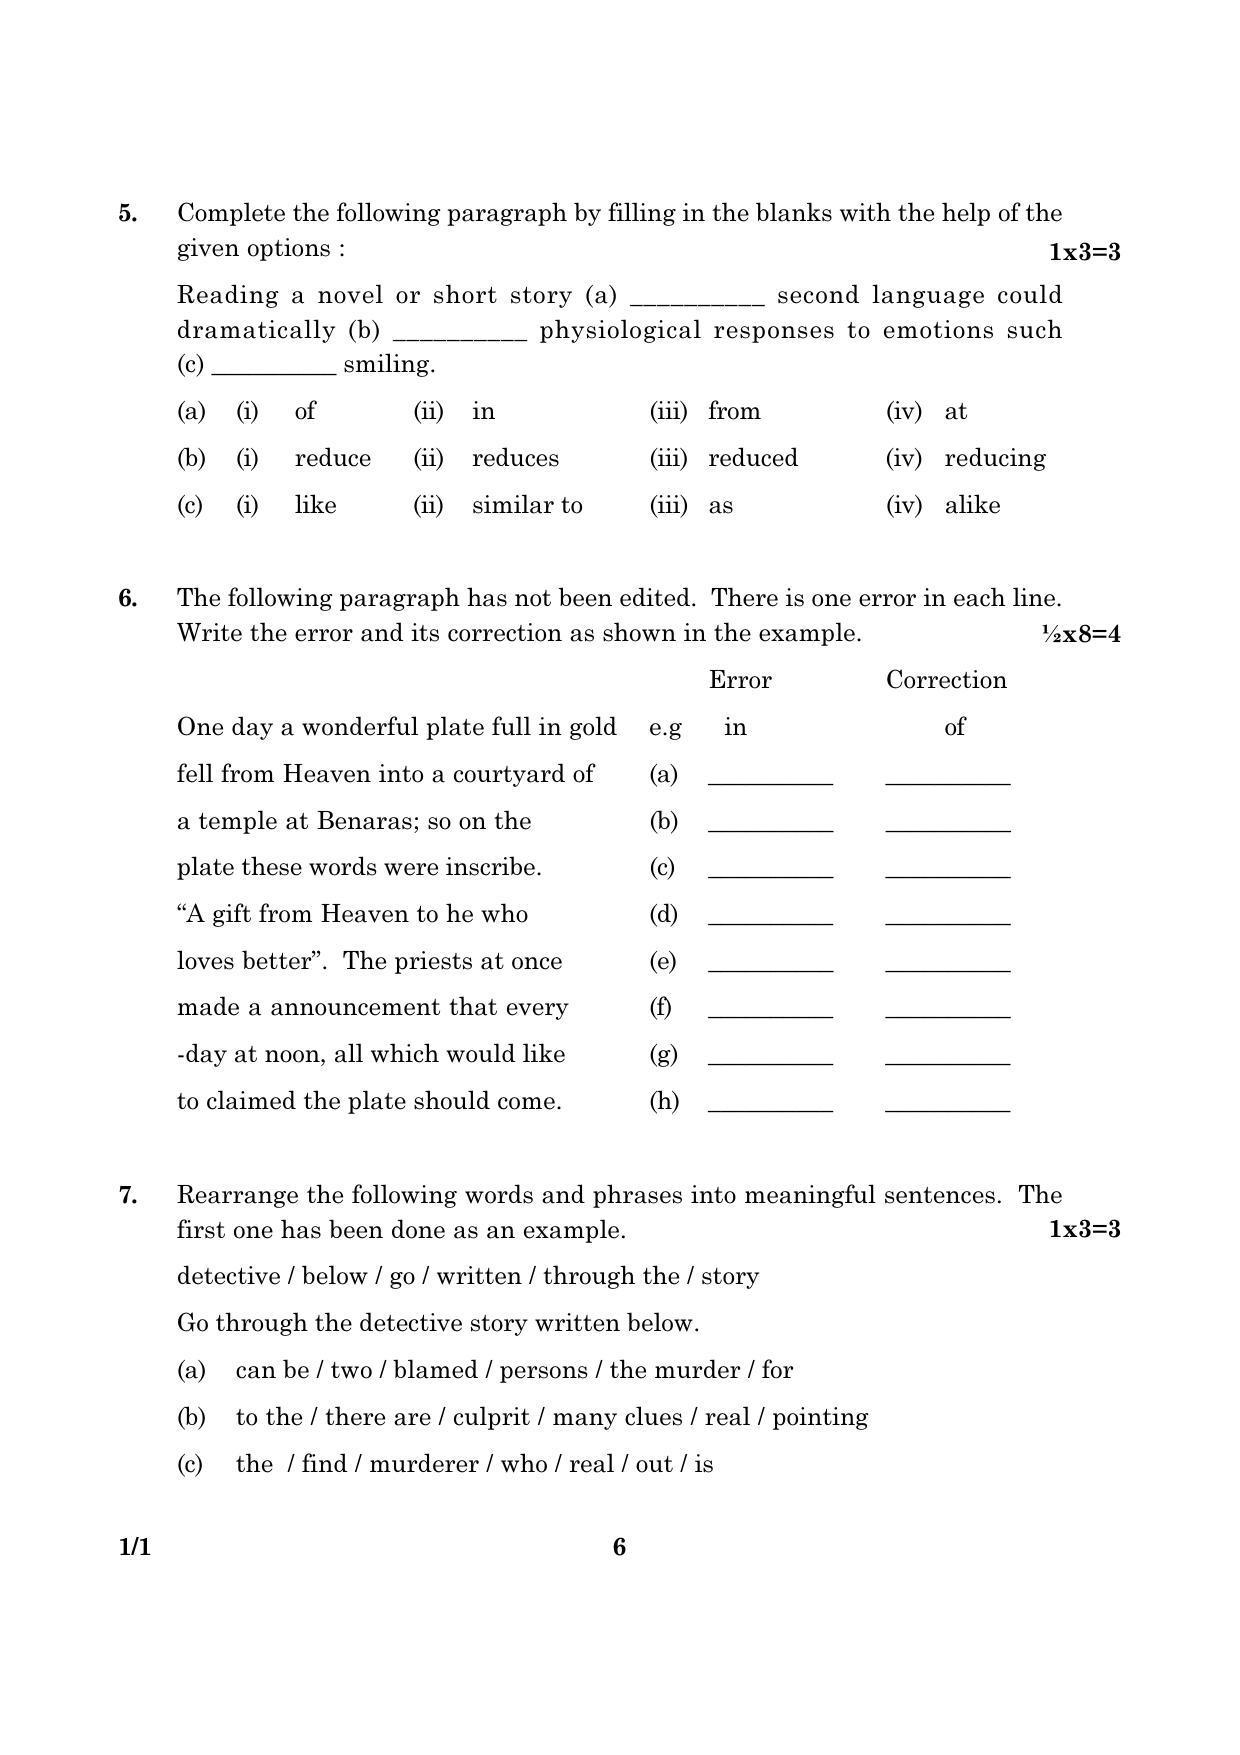 CBSE Class 10 001 Set 1 English Communicative 2016 Question Paper - Page 6